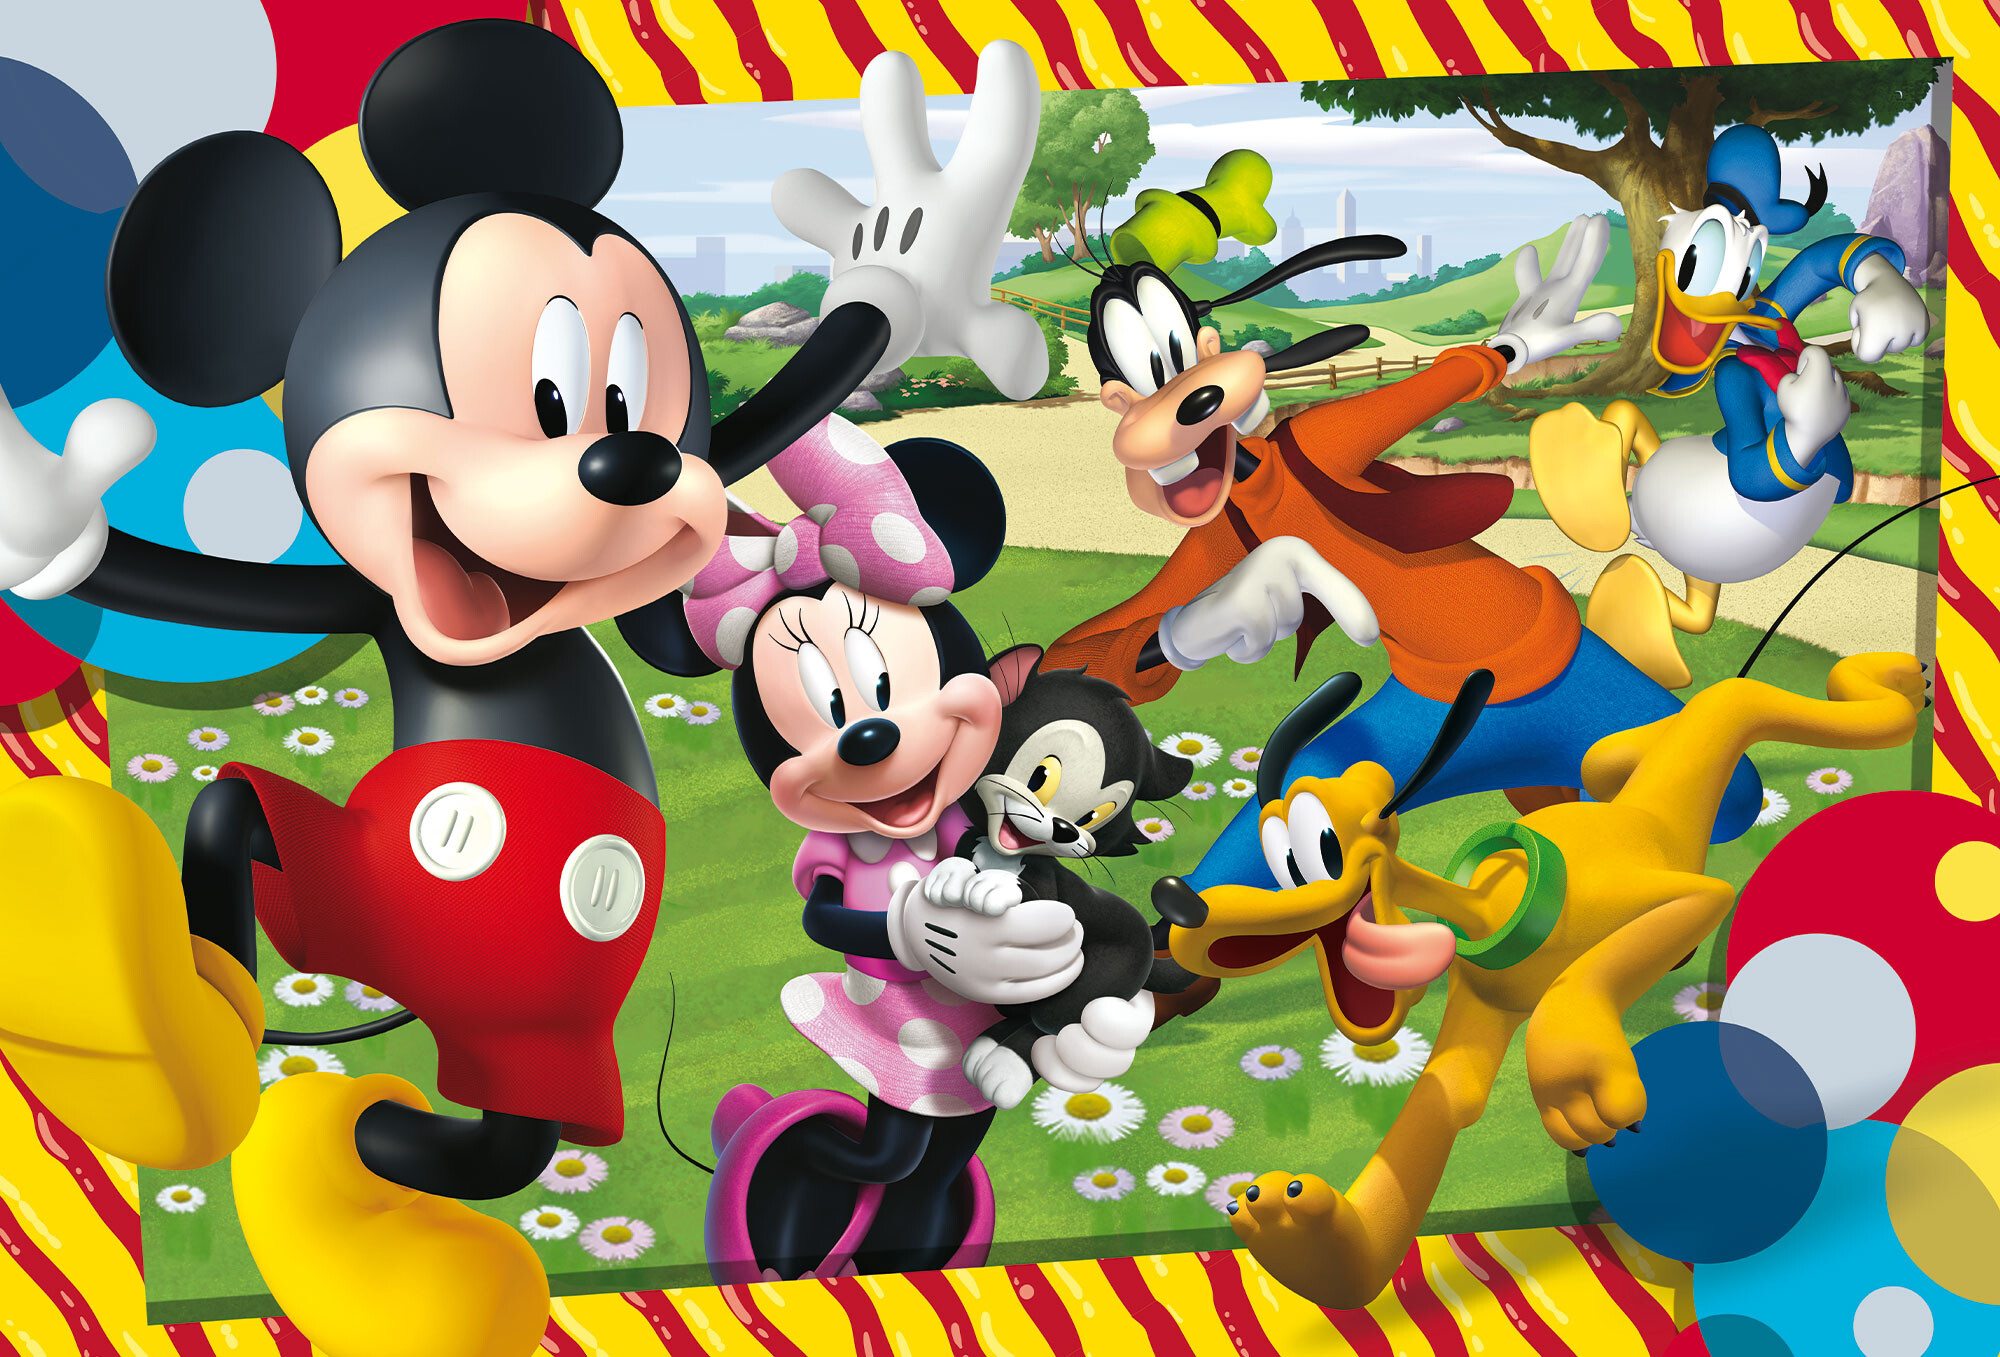 Disney puzzle maxifloor 4 x 48 mickey - LISCIANI